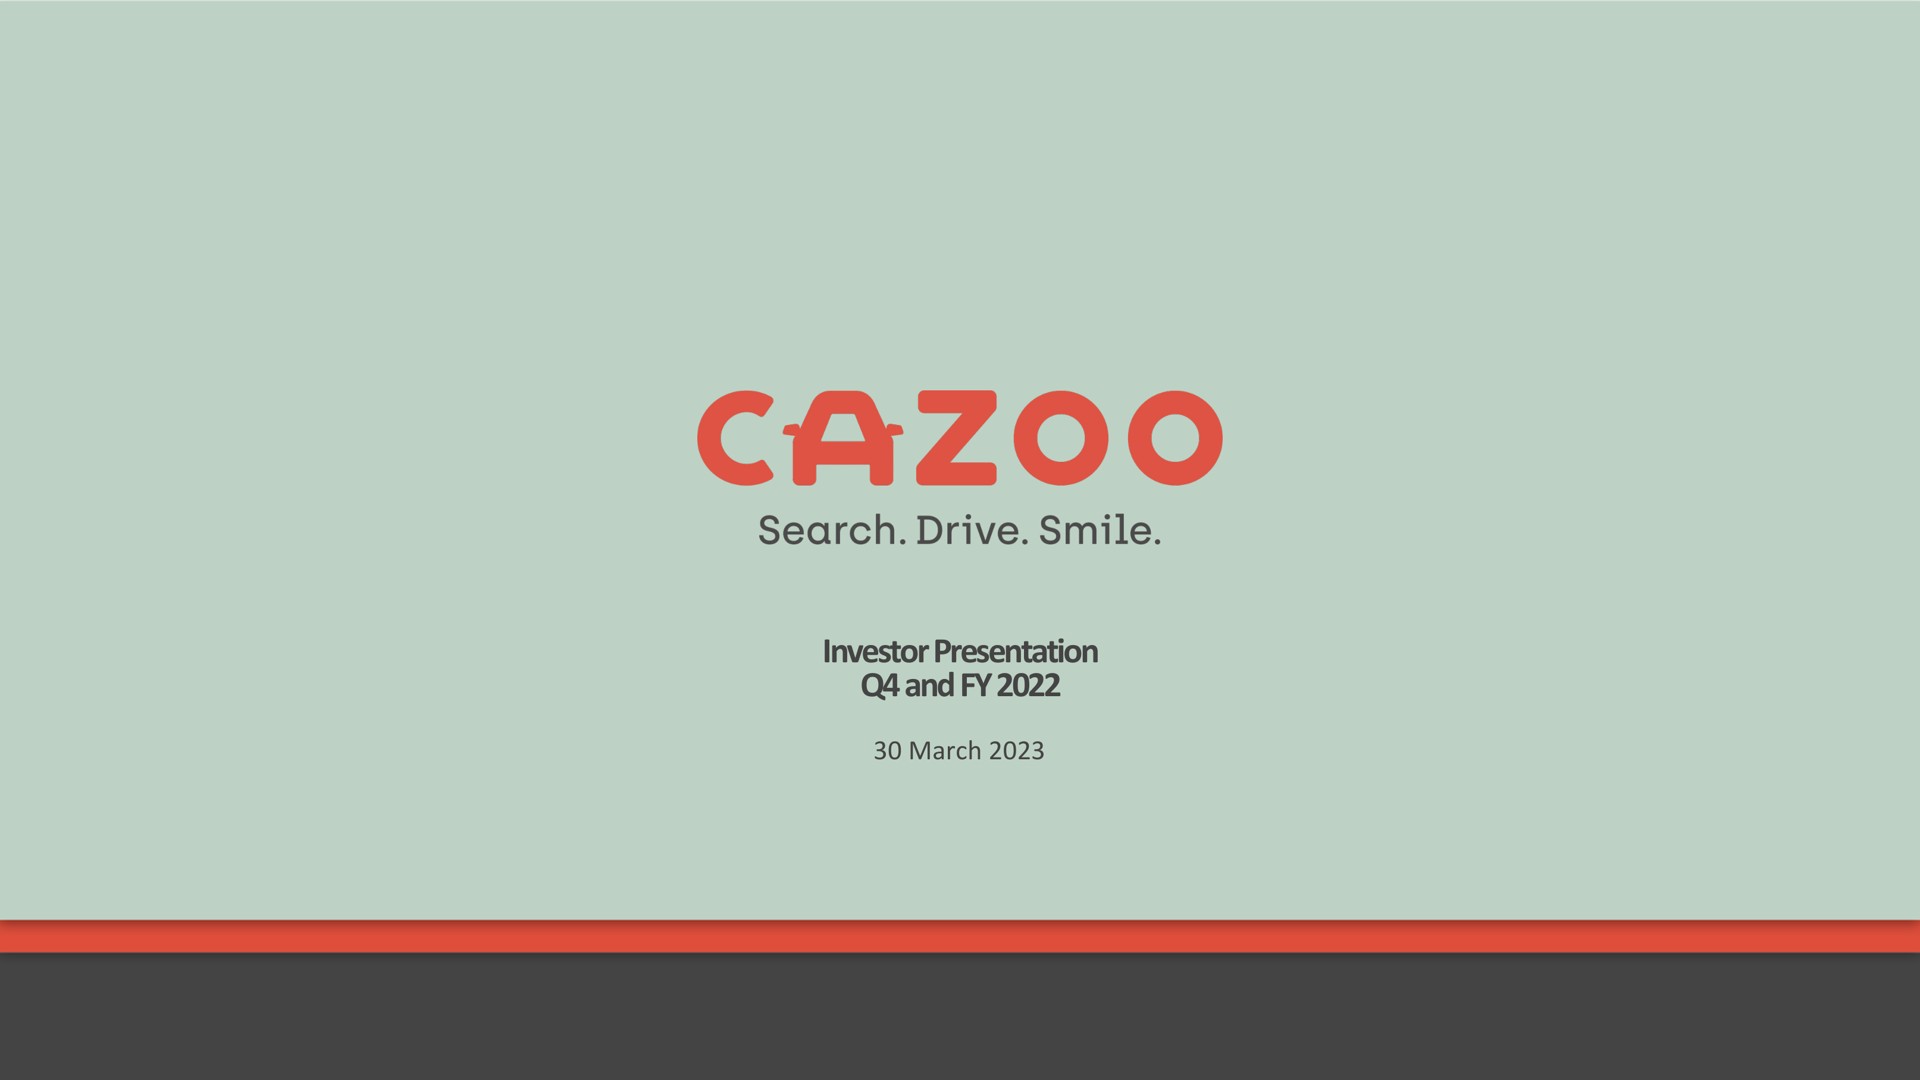 investor presentation and search drive smile | Cazoo